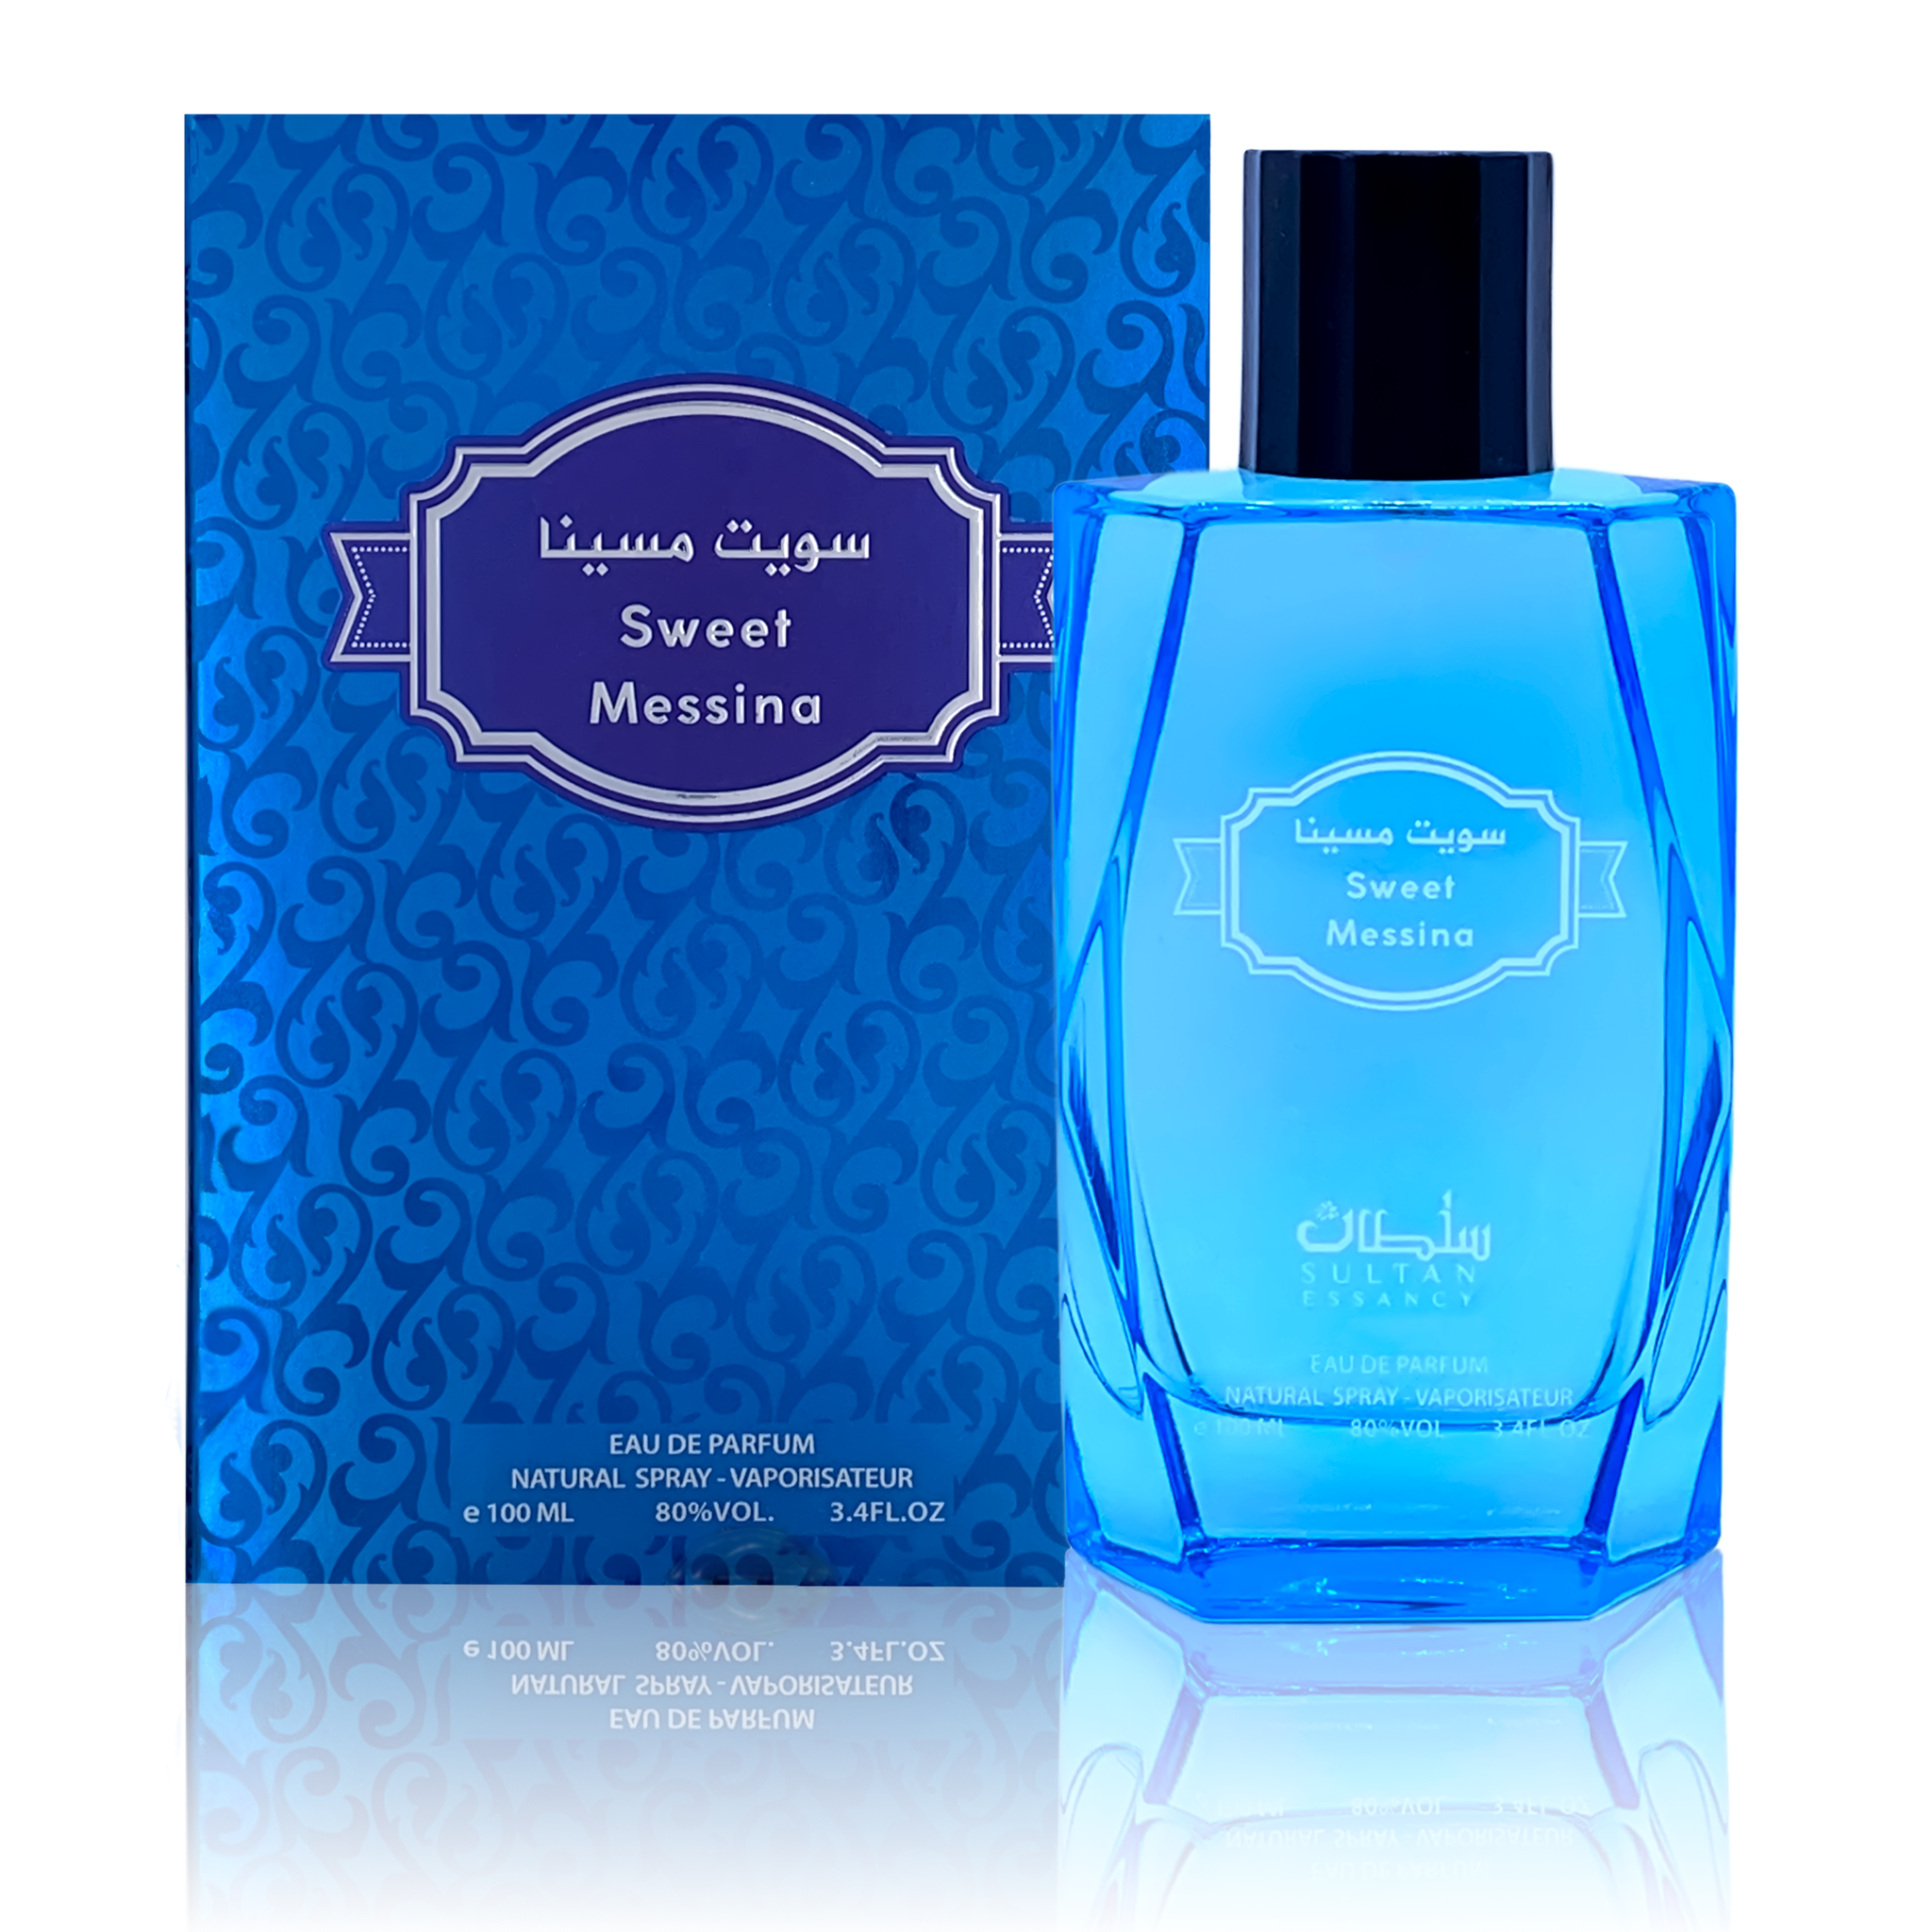 N5 Eau de Parfum - SweetCare United States